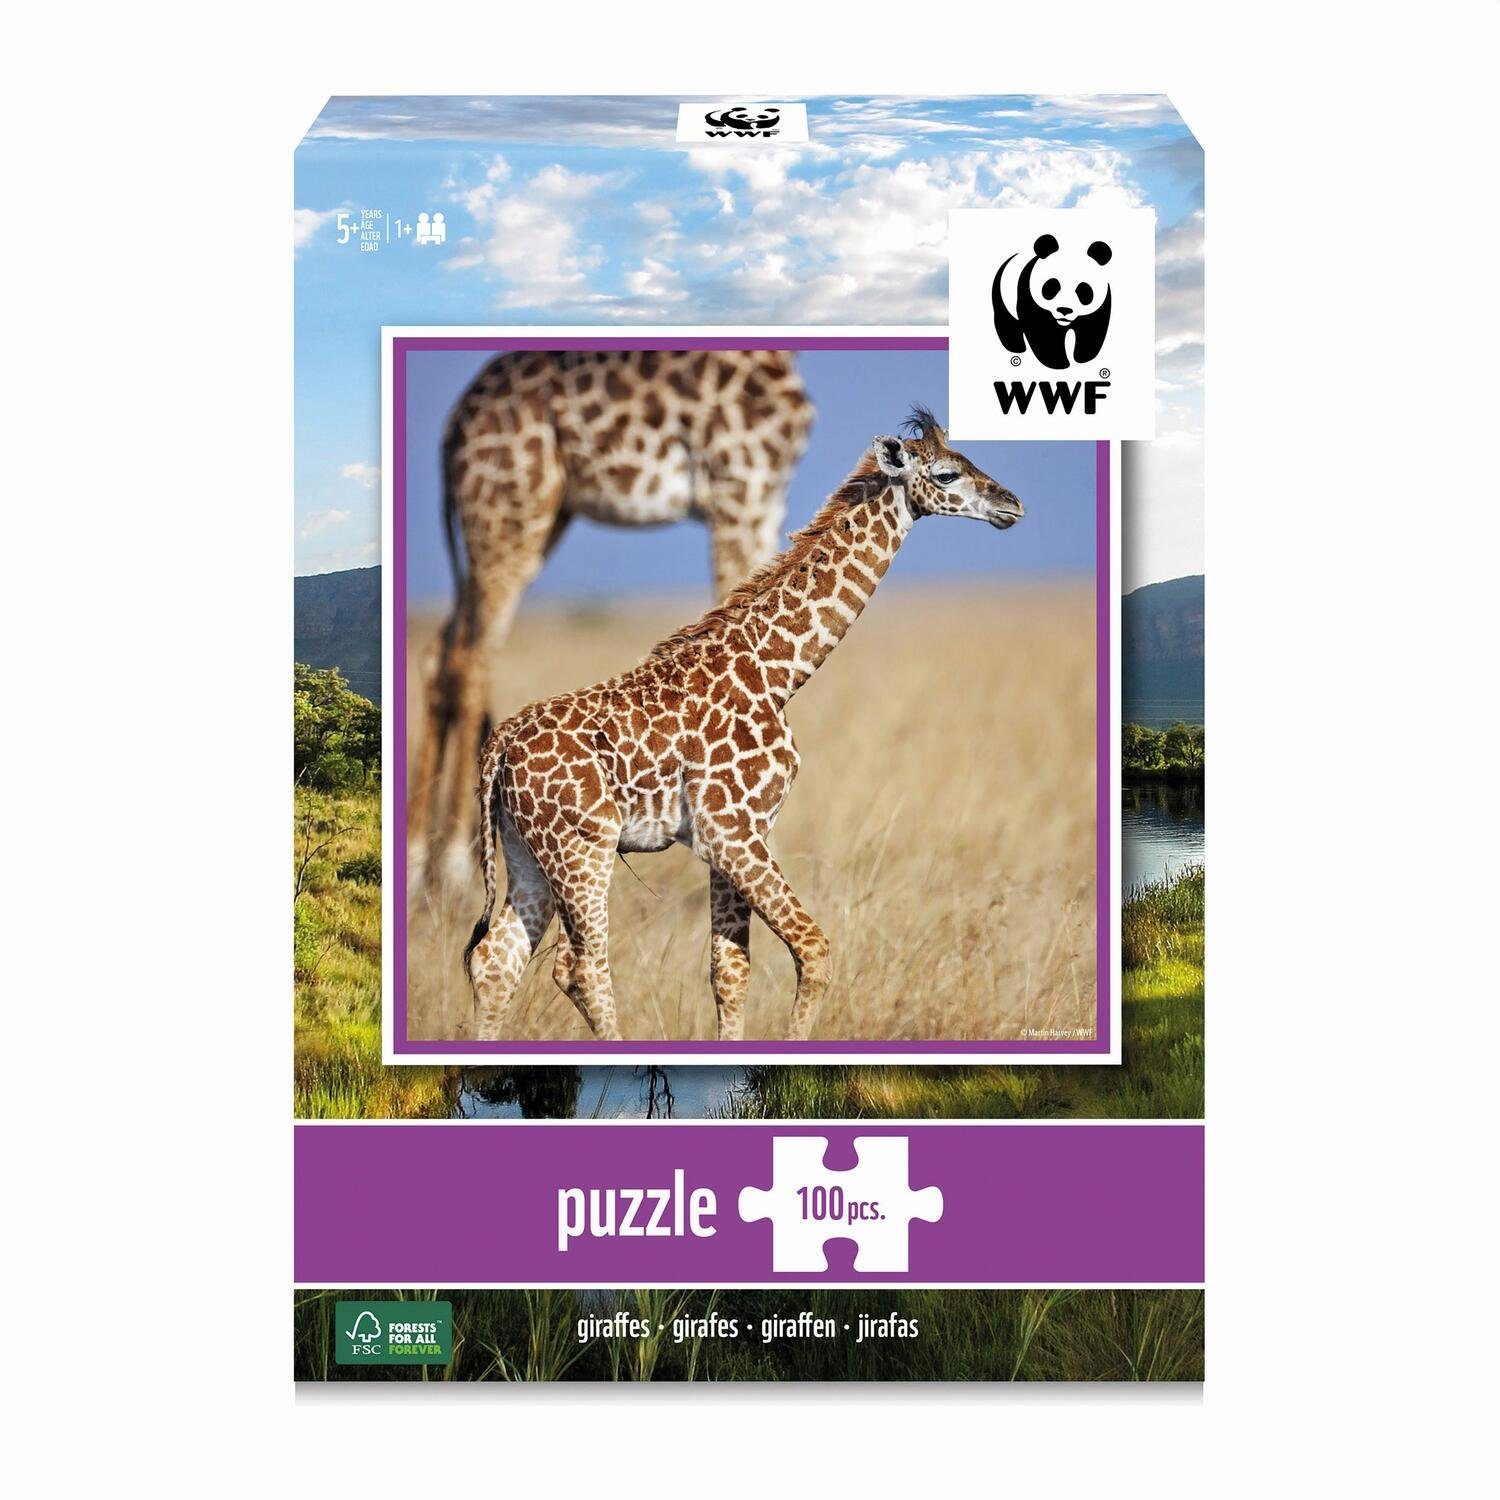 Carletto Puzzle AMBASSADOR - Giraffen 100 Teile, 100 Puzzleteile